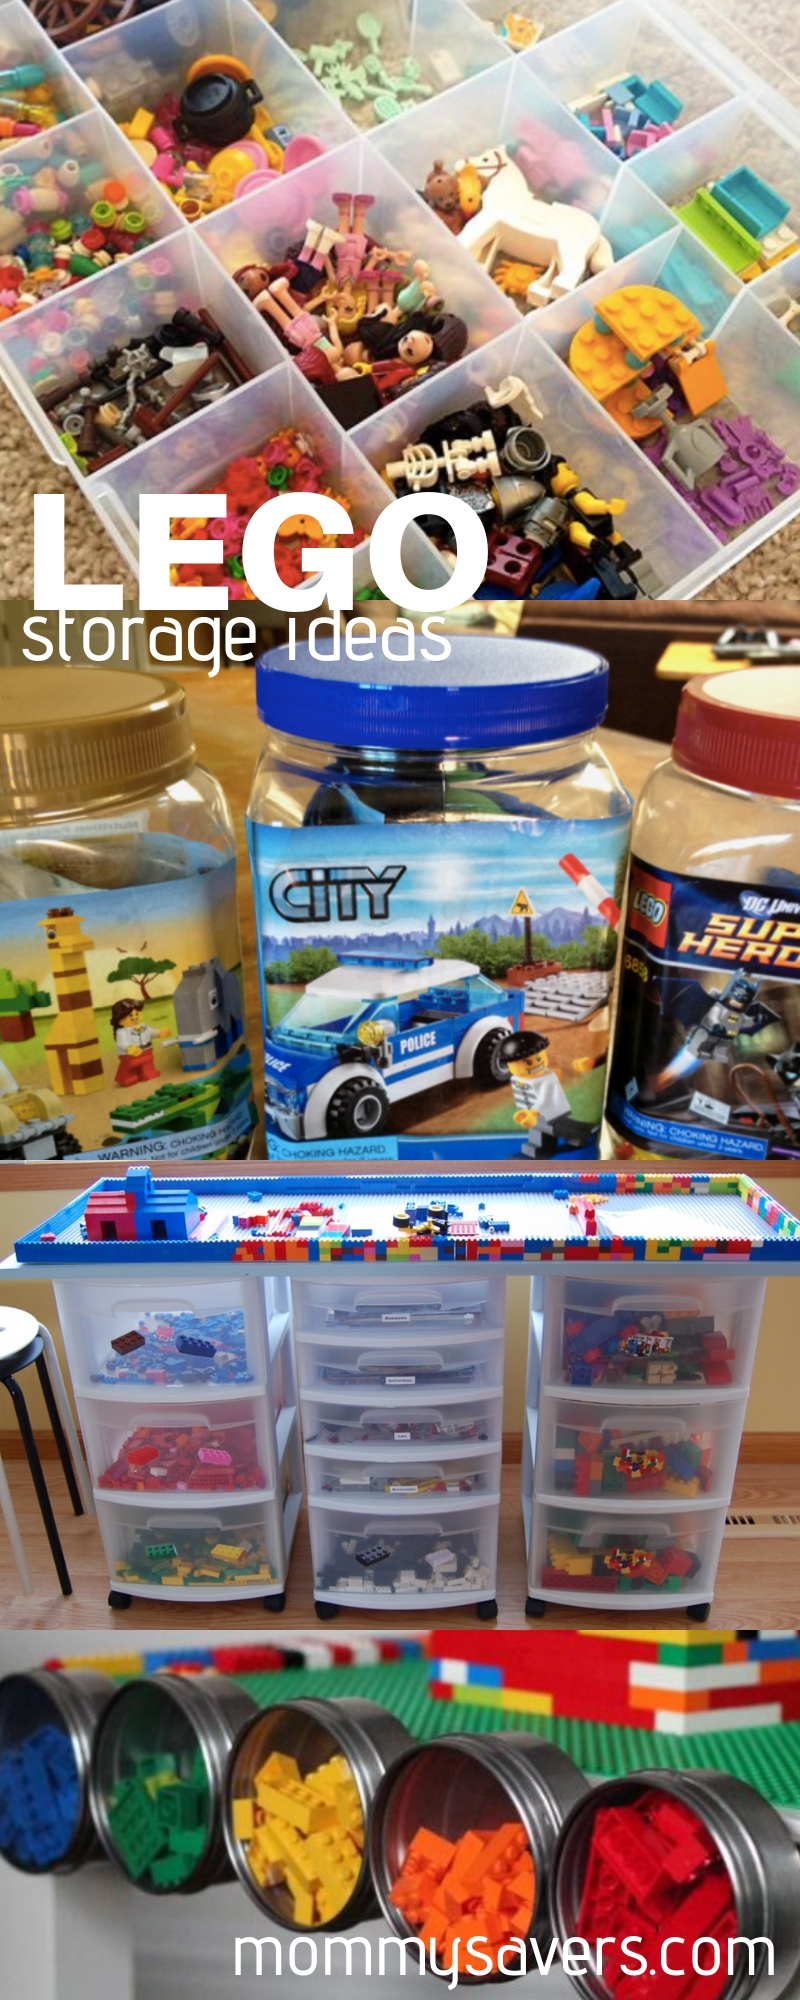 LEGO storage ideas